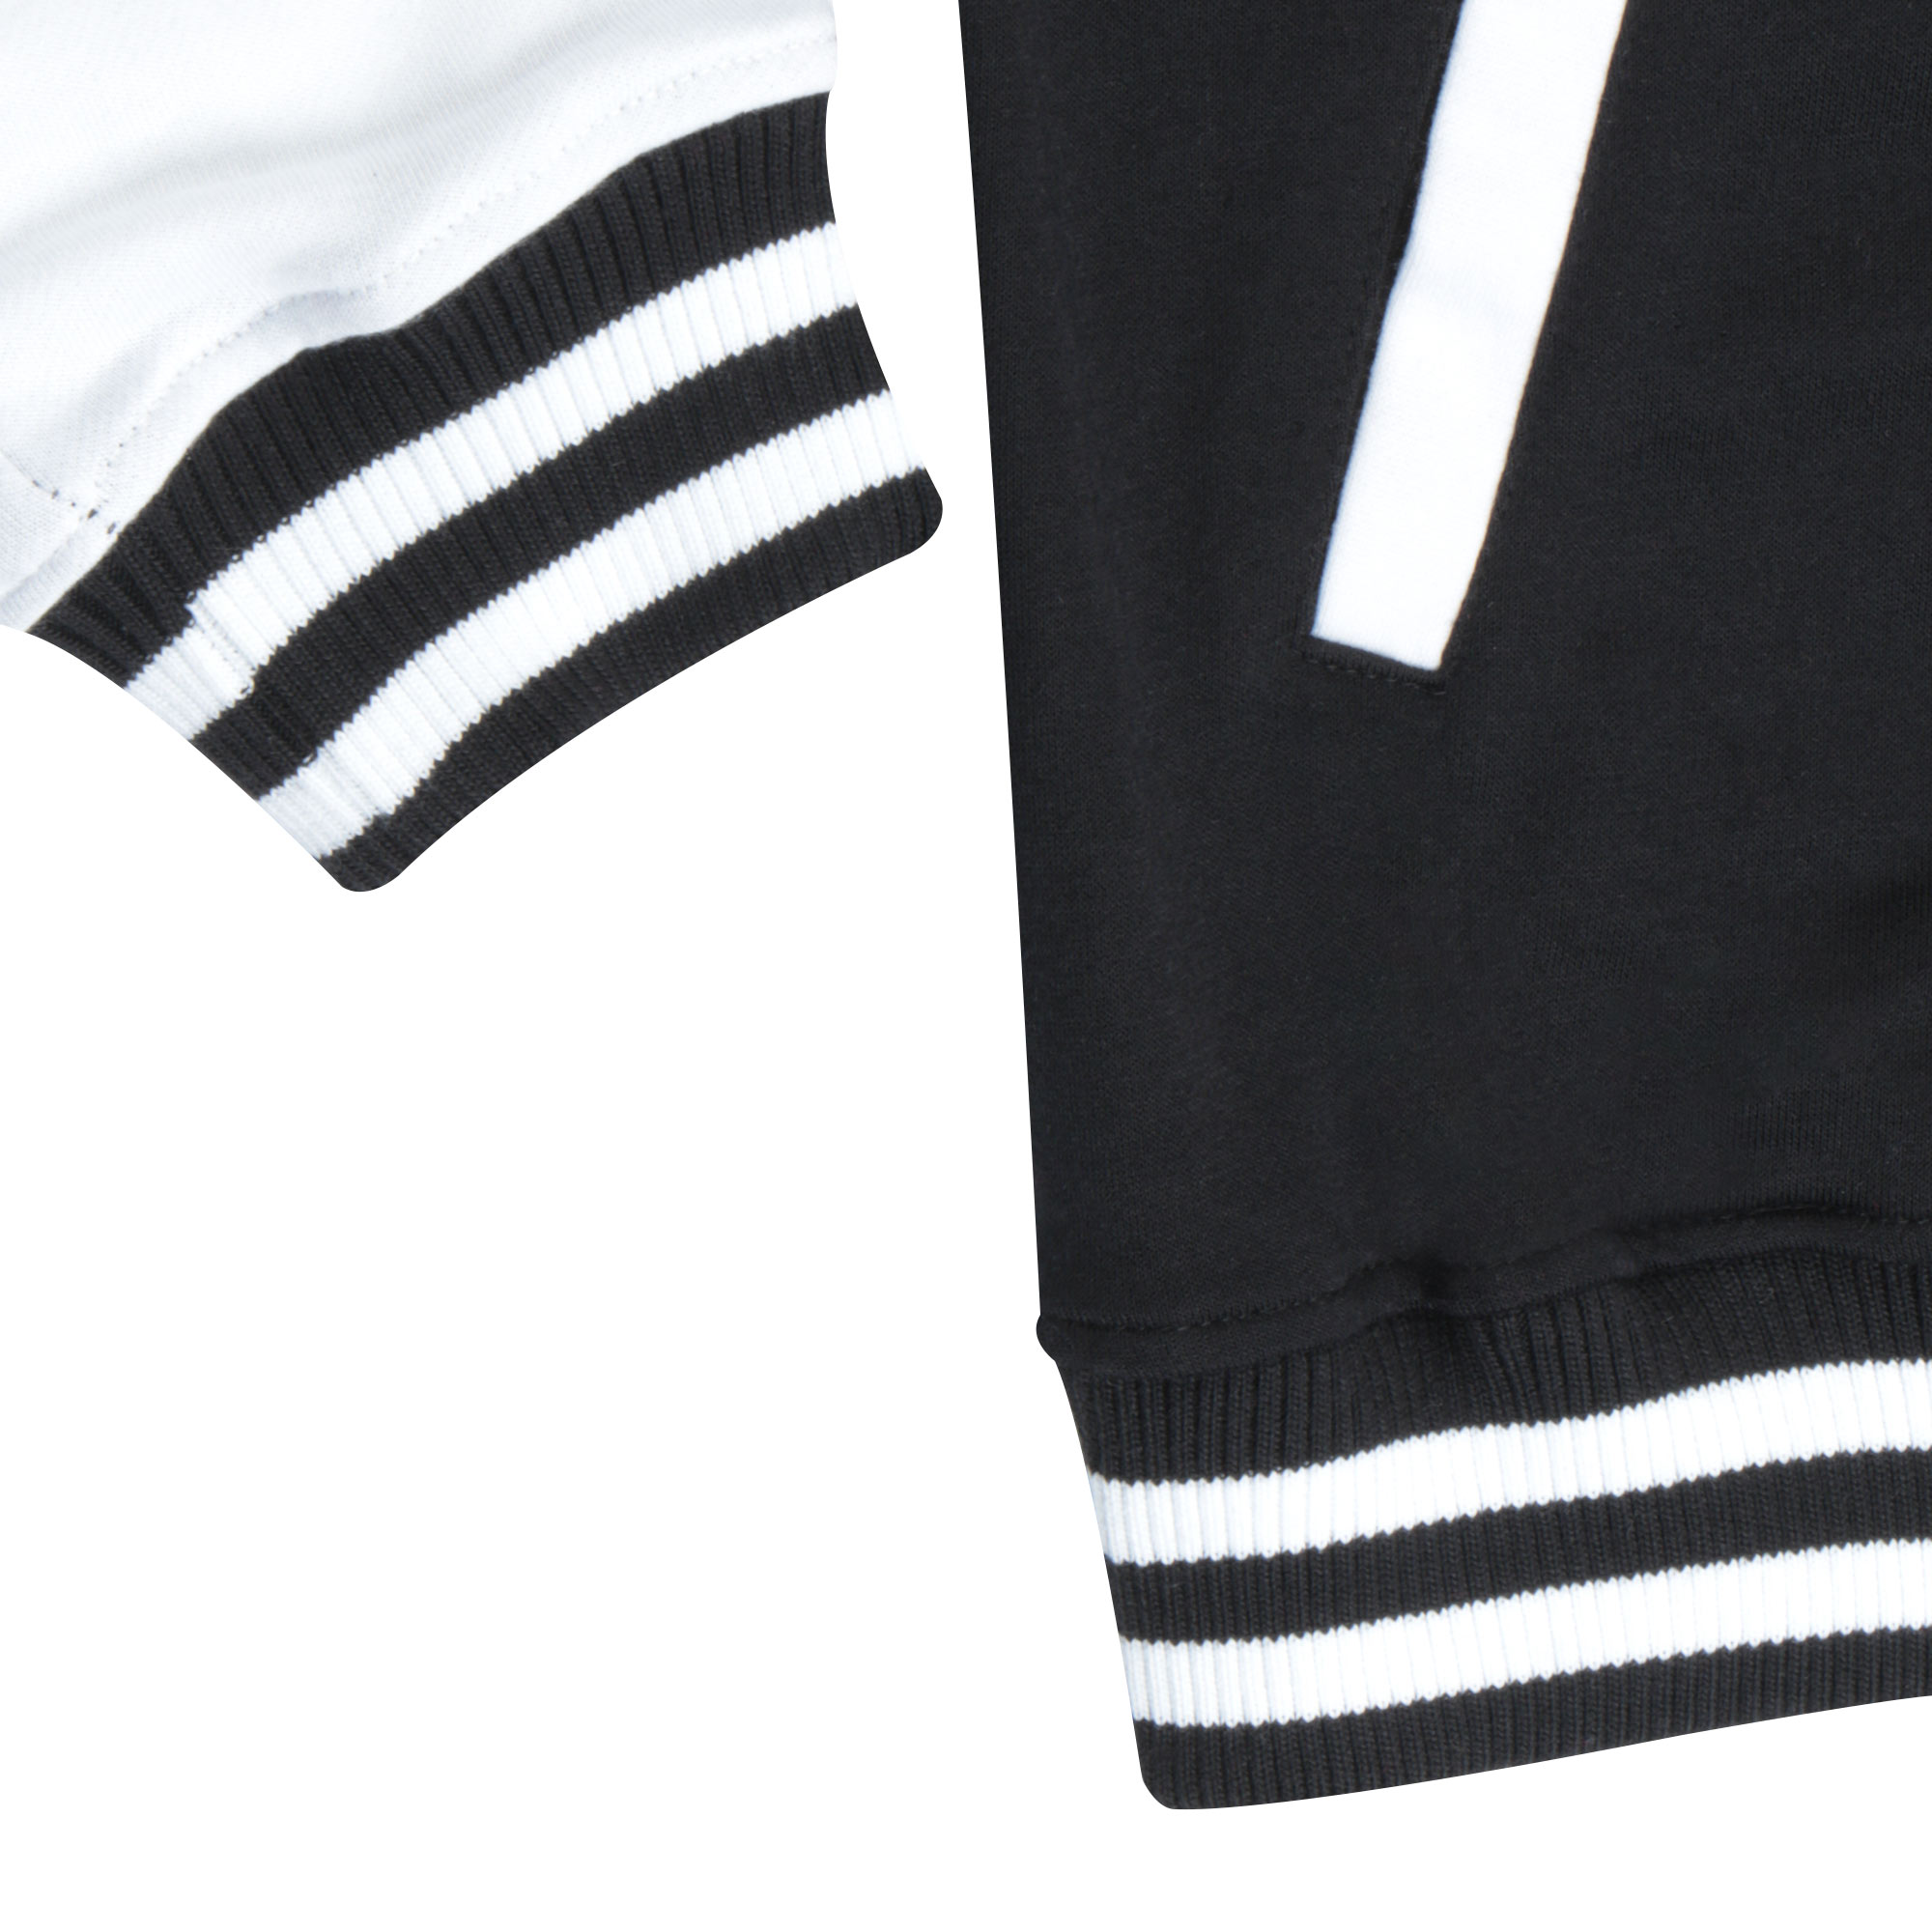 Бомбер Garment чёрный/белый XXL полиэстер, цвет черный, размер XXL - фото 2